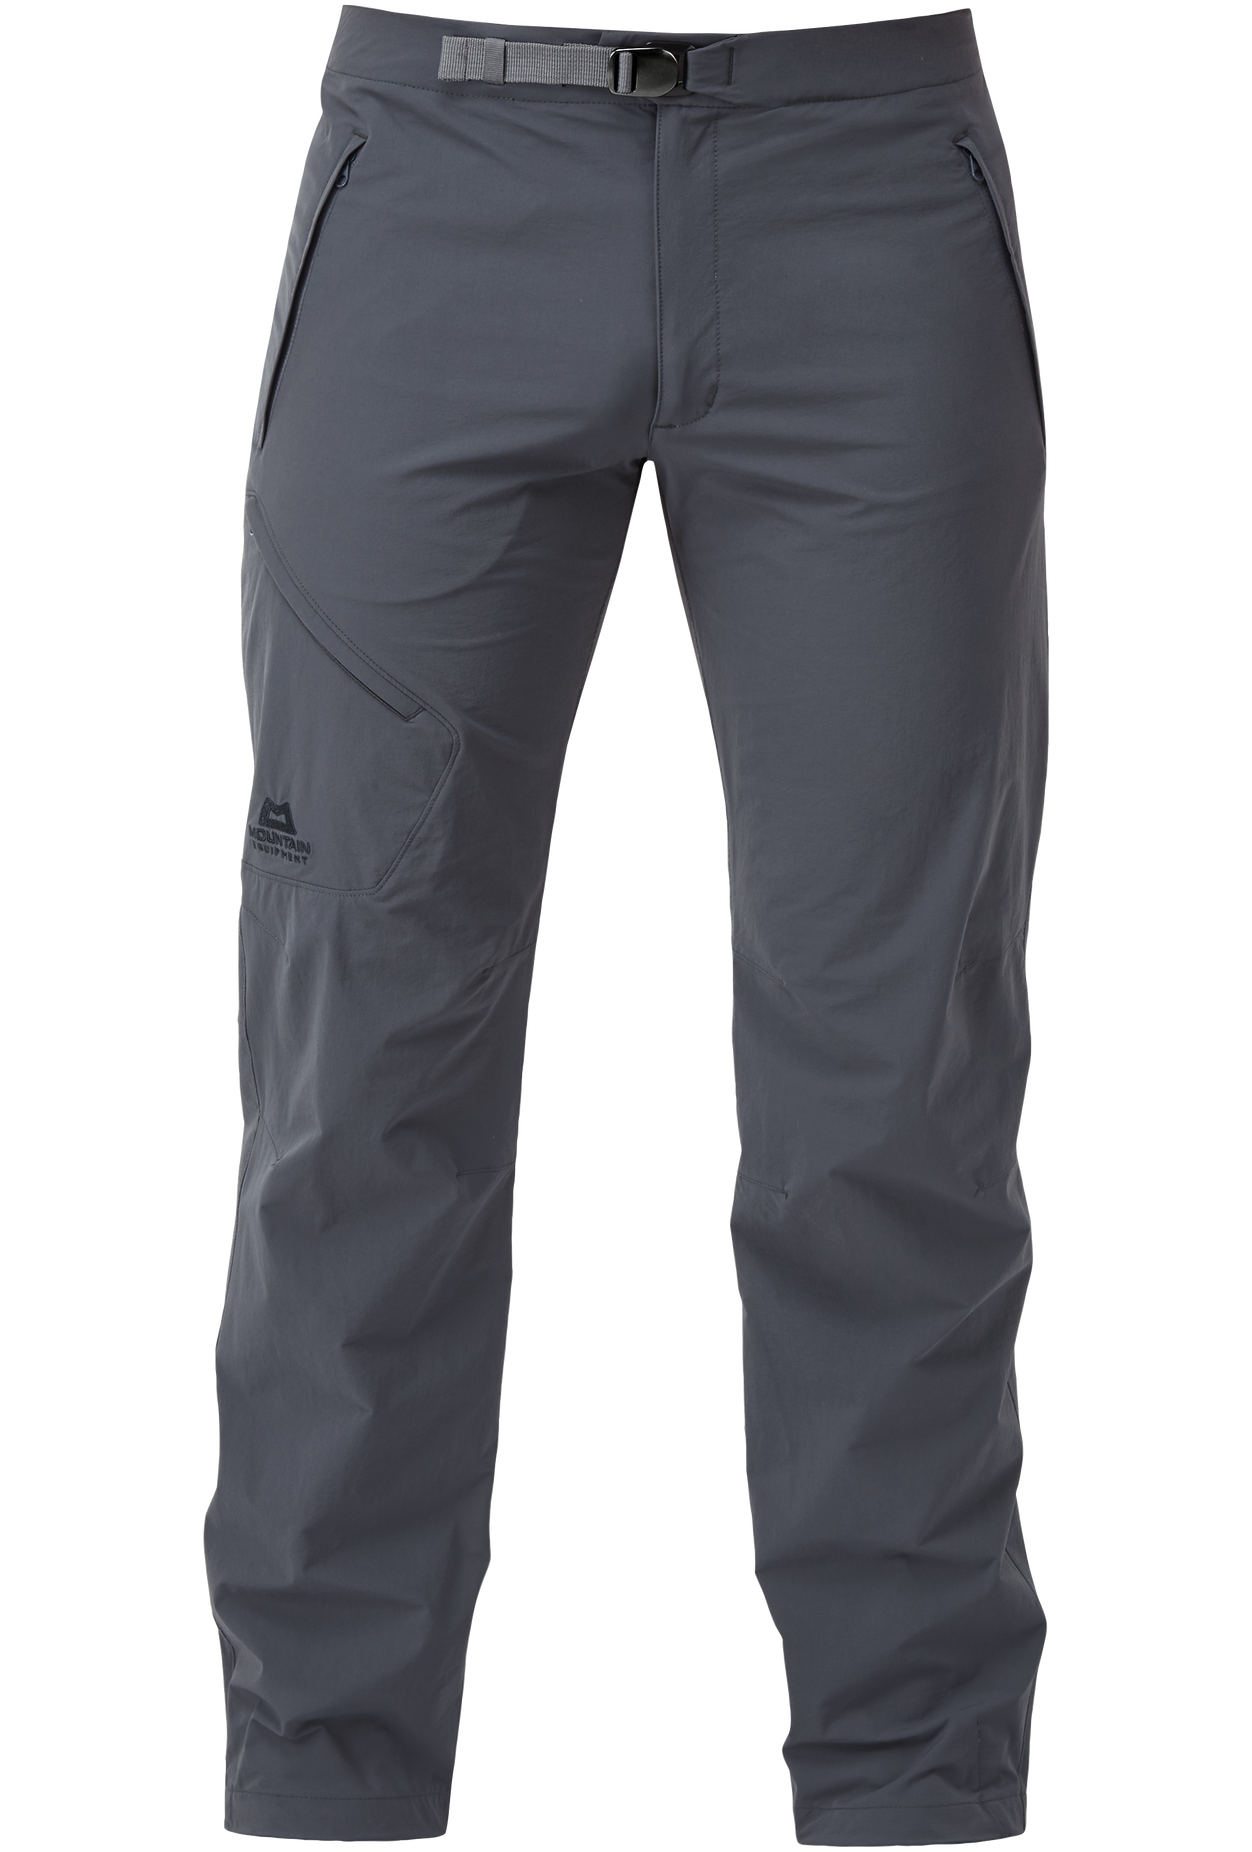 Mountain Equipment pánské softshellové kalhoty Comici Pant Barva: Ombre Blue, Velikost: 36/XL